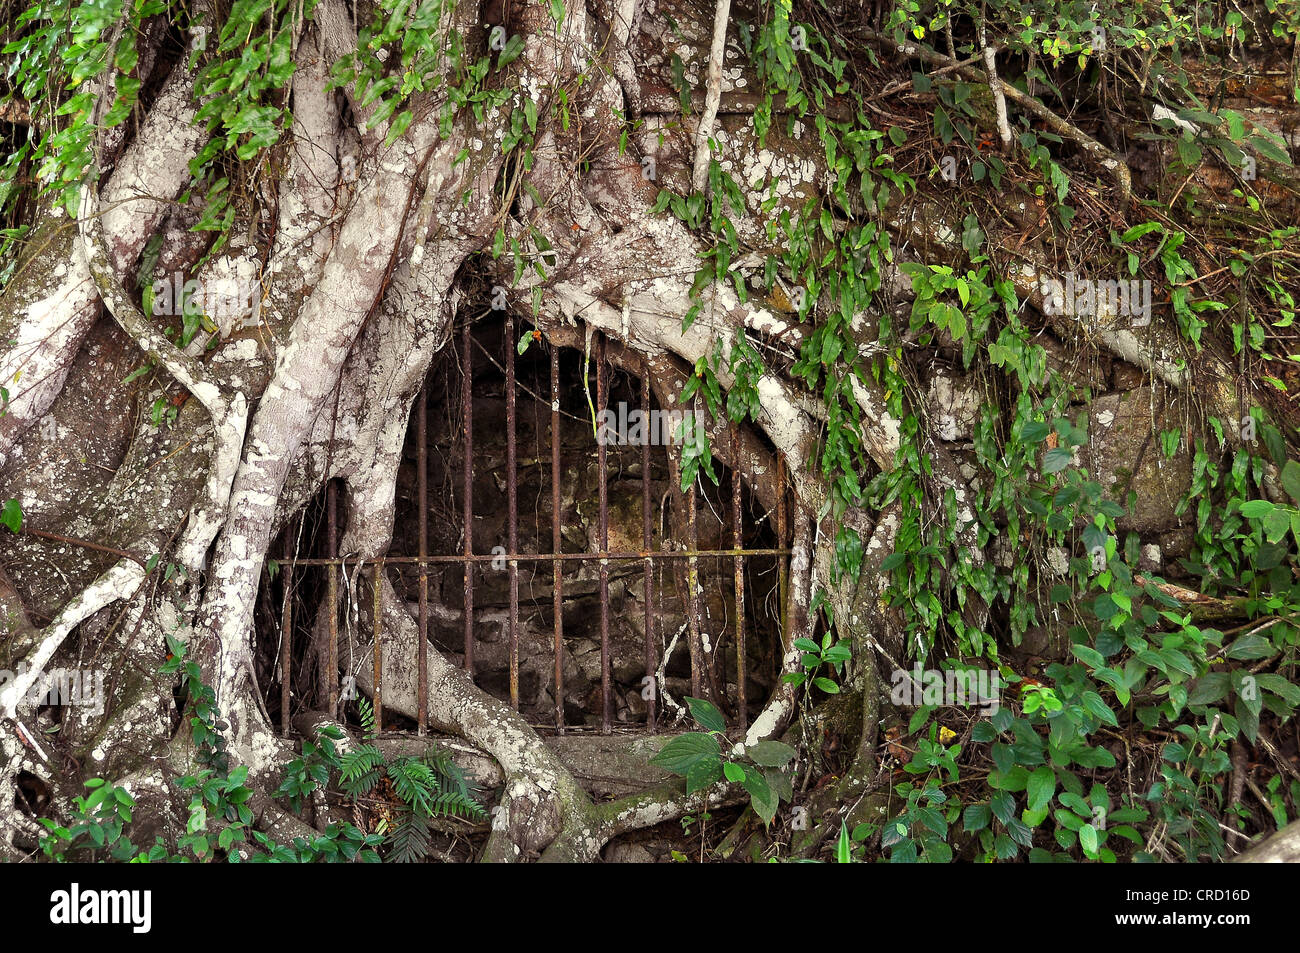 Forest of Okoya Dada Zarude • OT: オコヤのもり, Jungle, Giungla, Dschungel